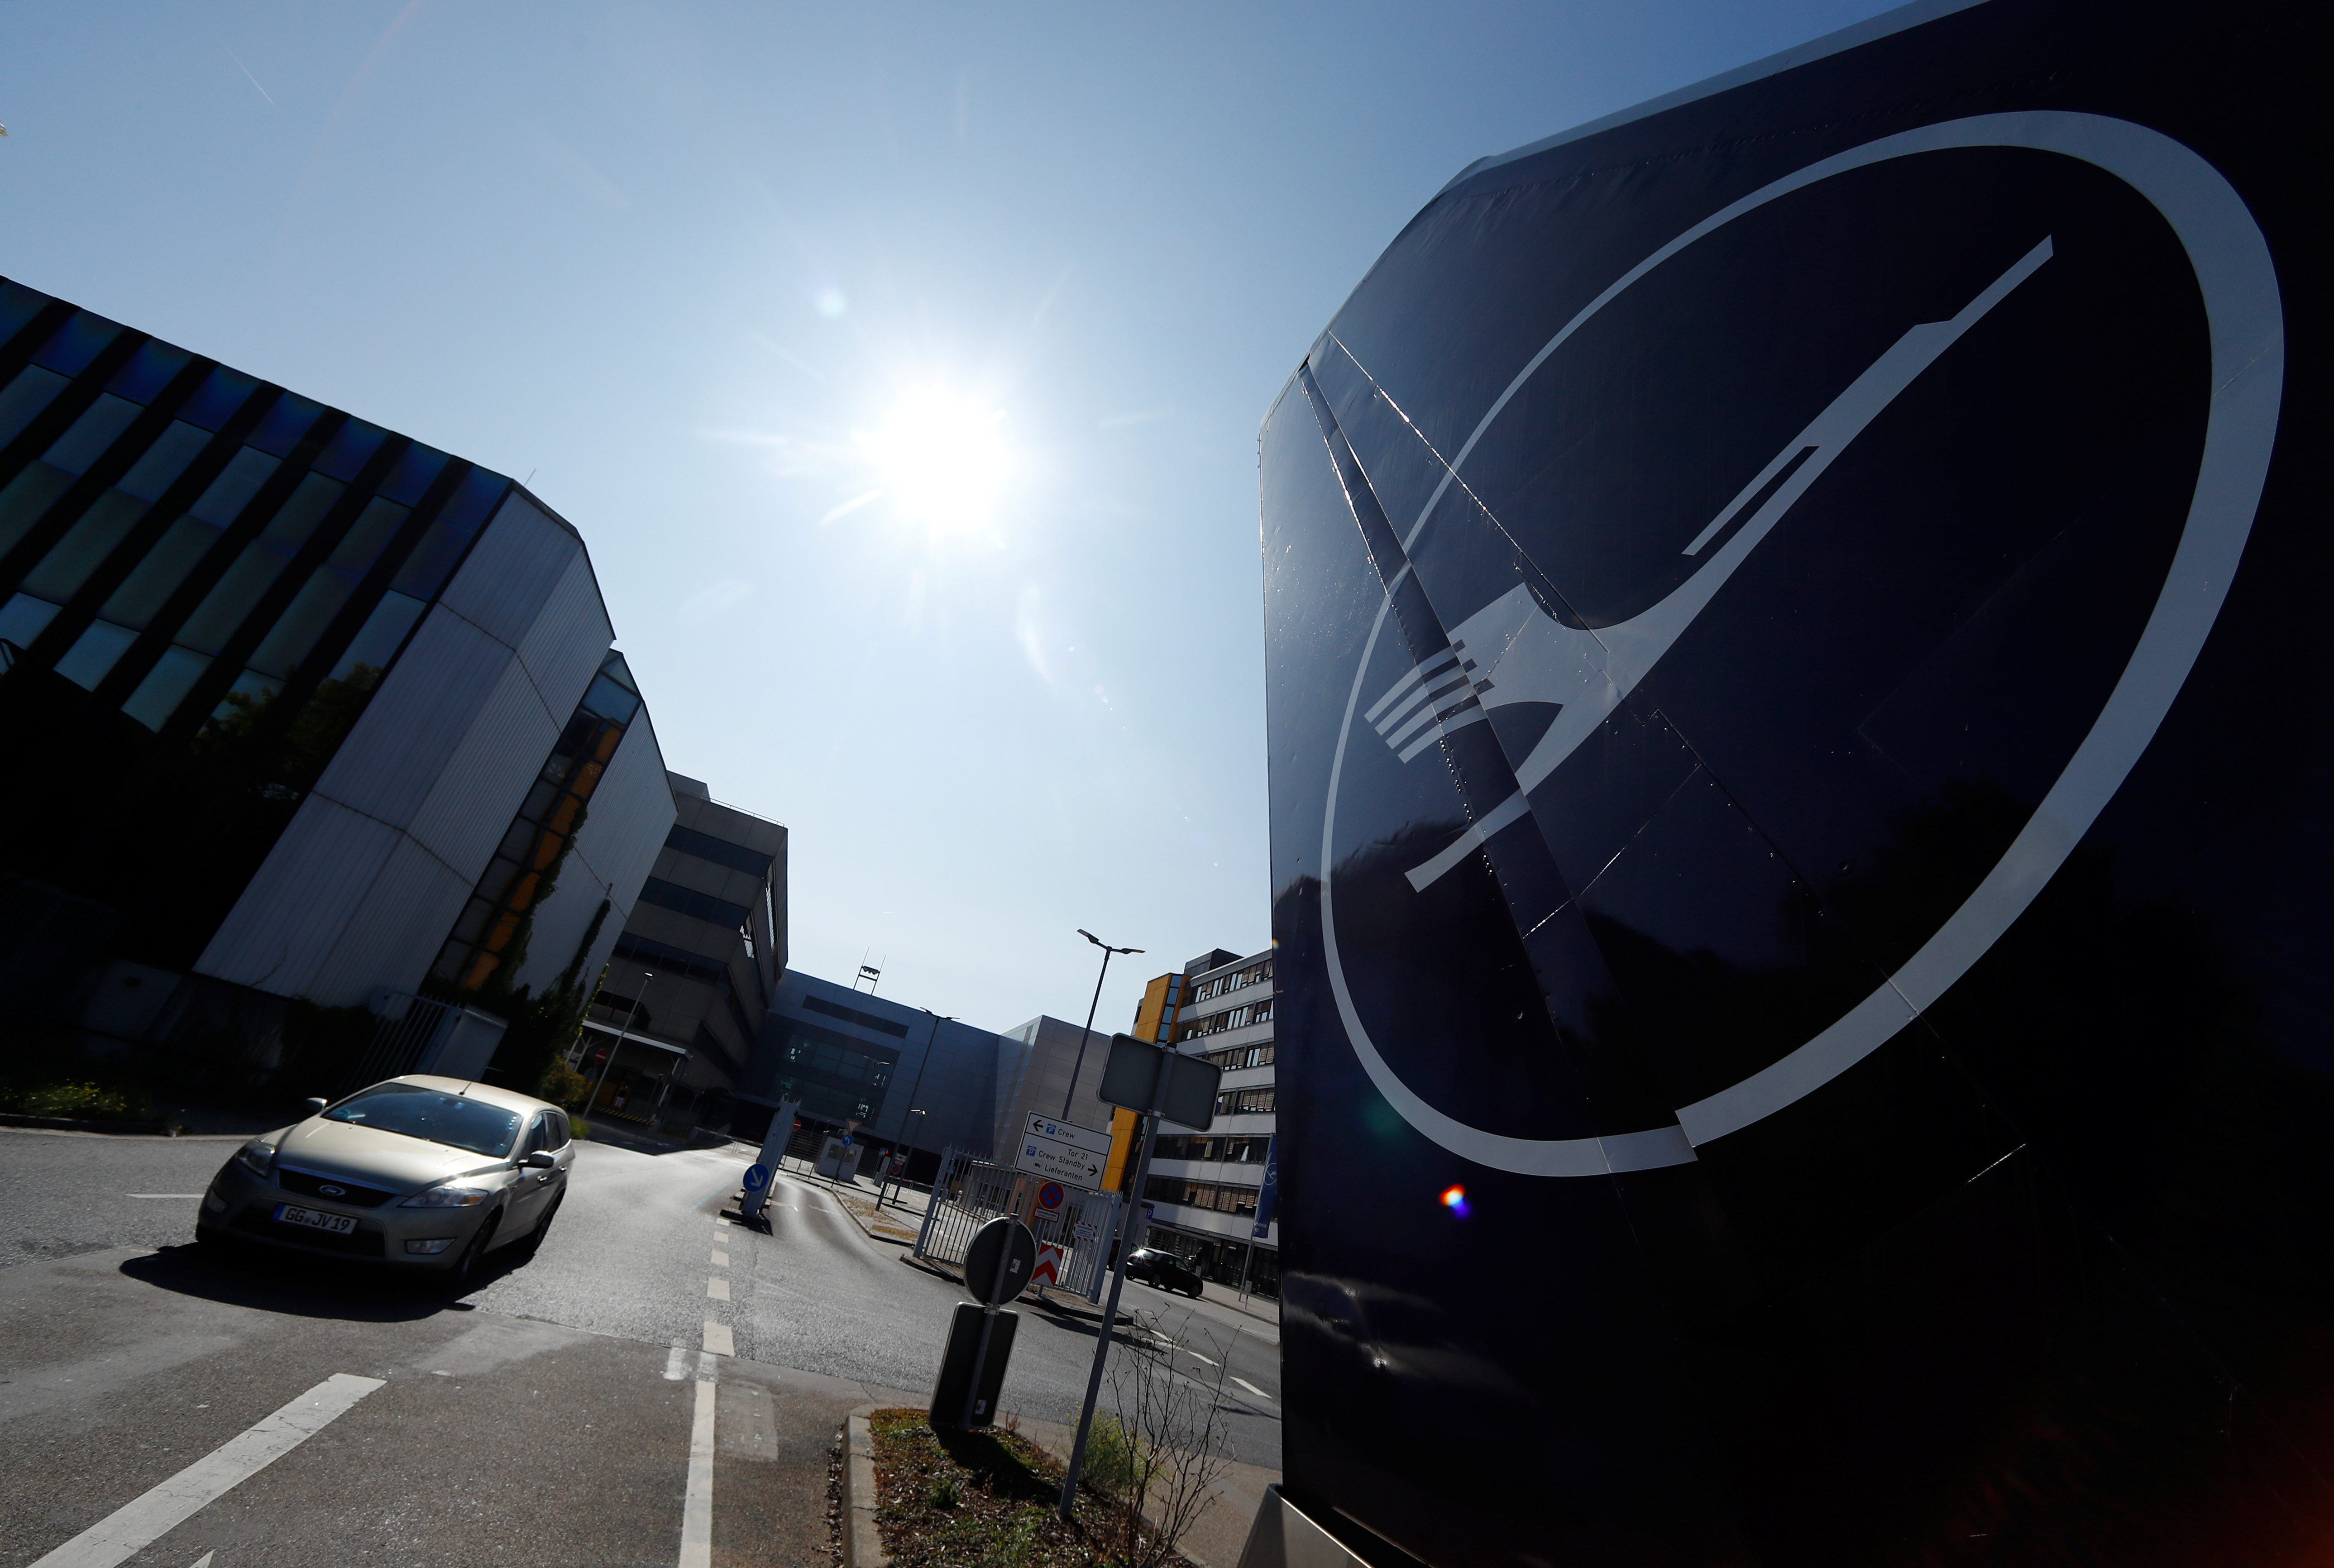 Lufthansa supervisory board discusses strategy amid the coronavirus pandemic